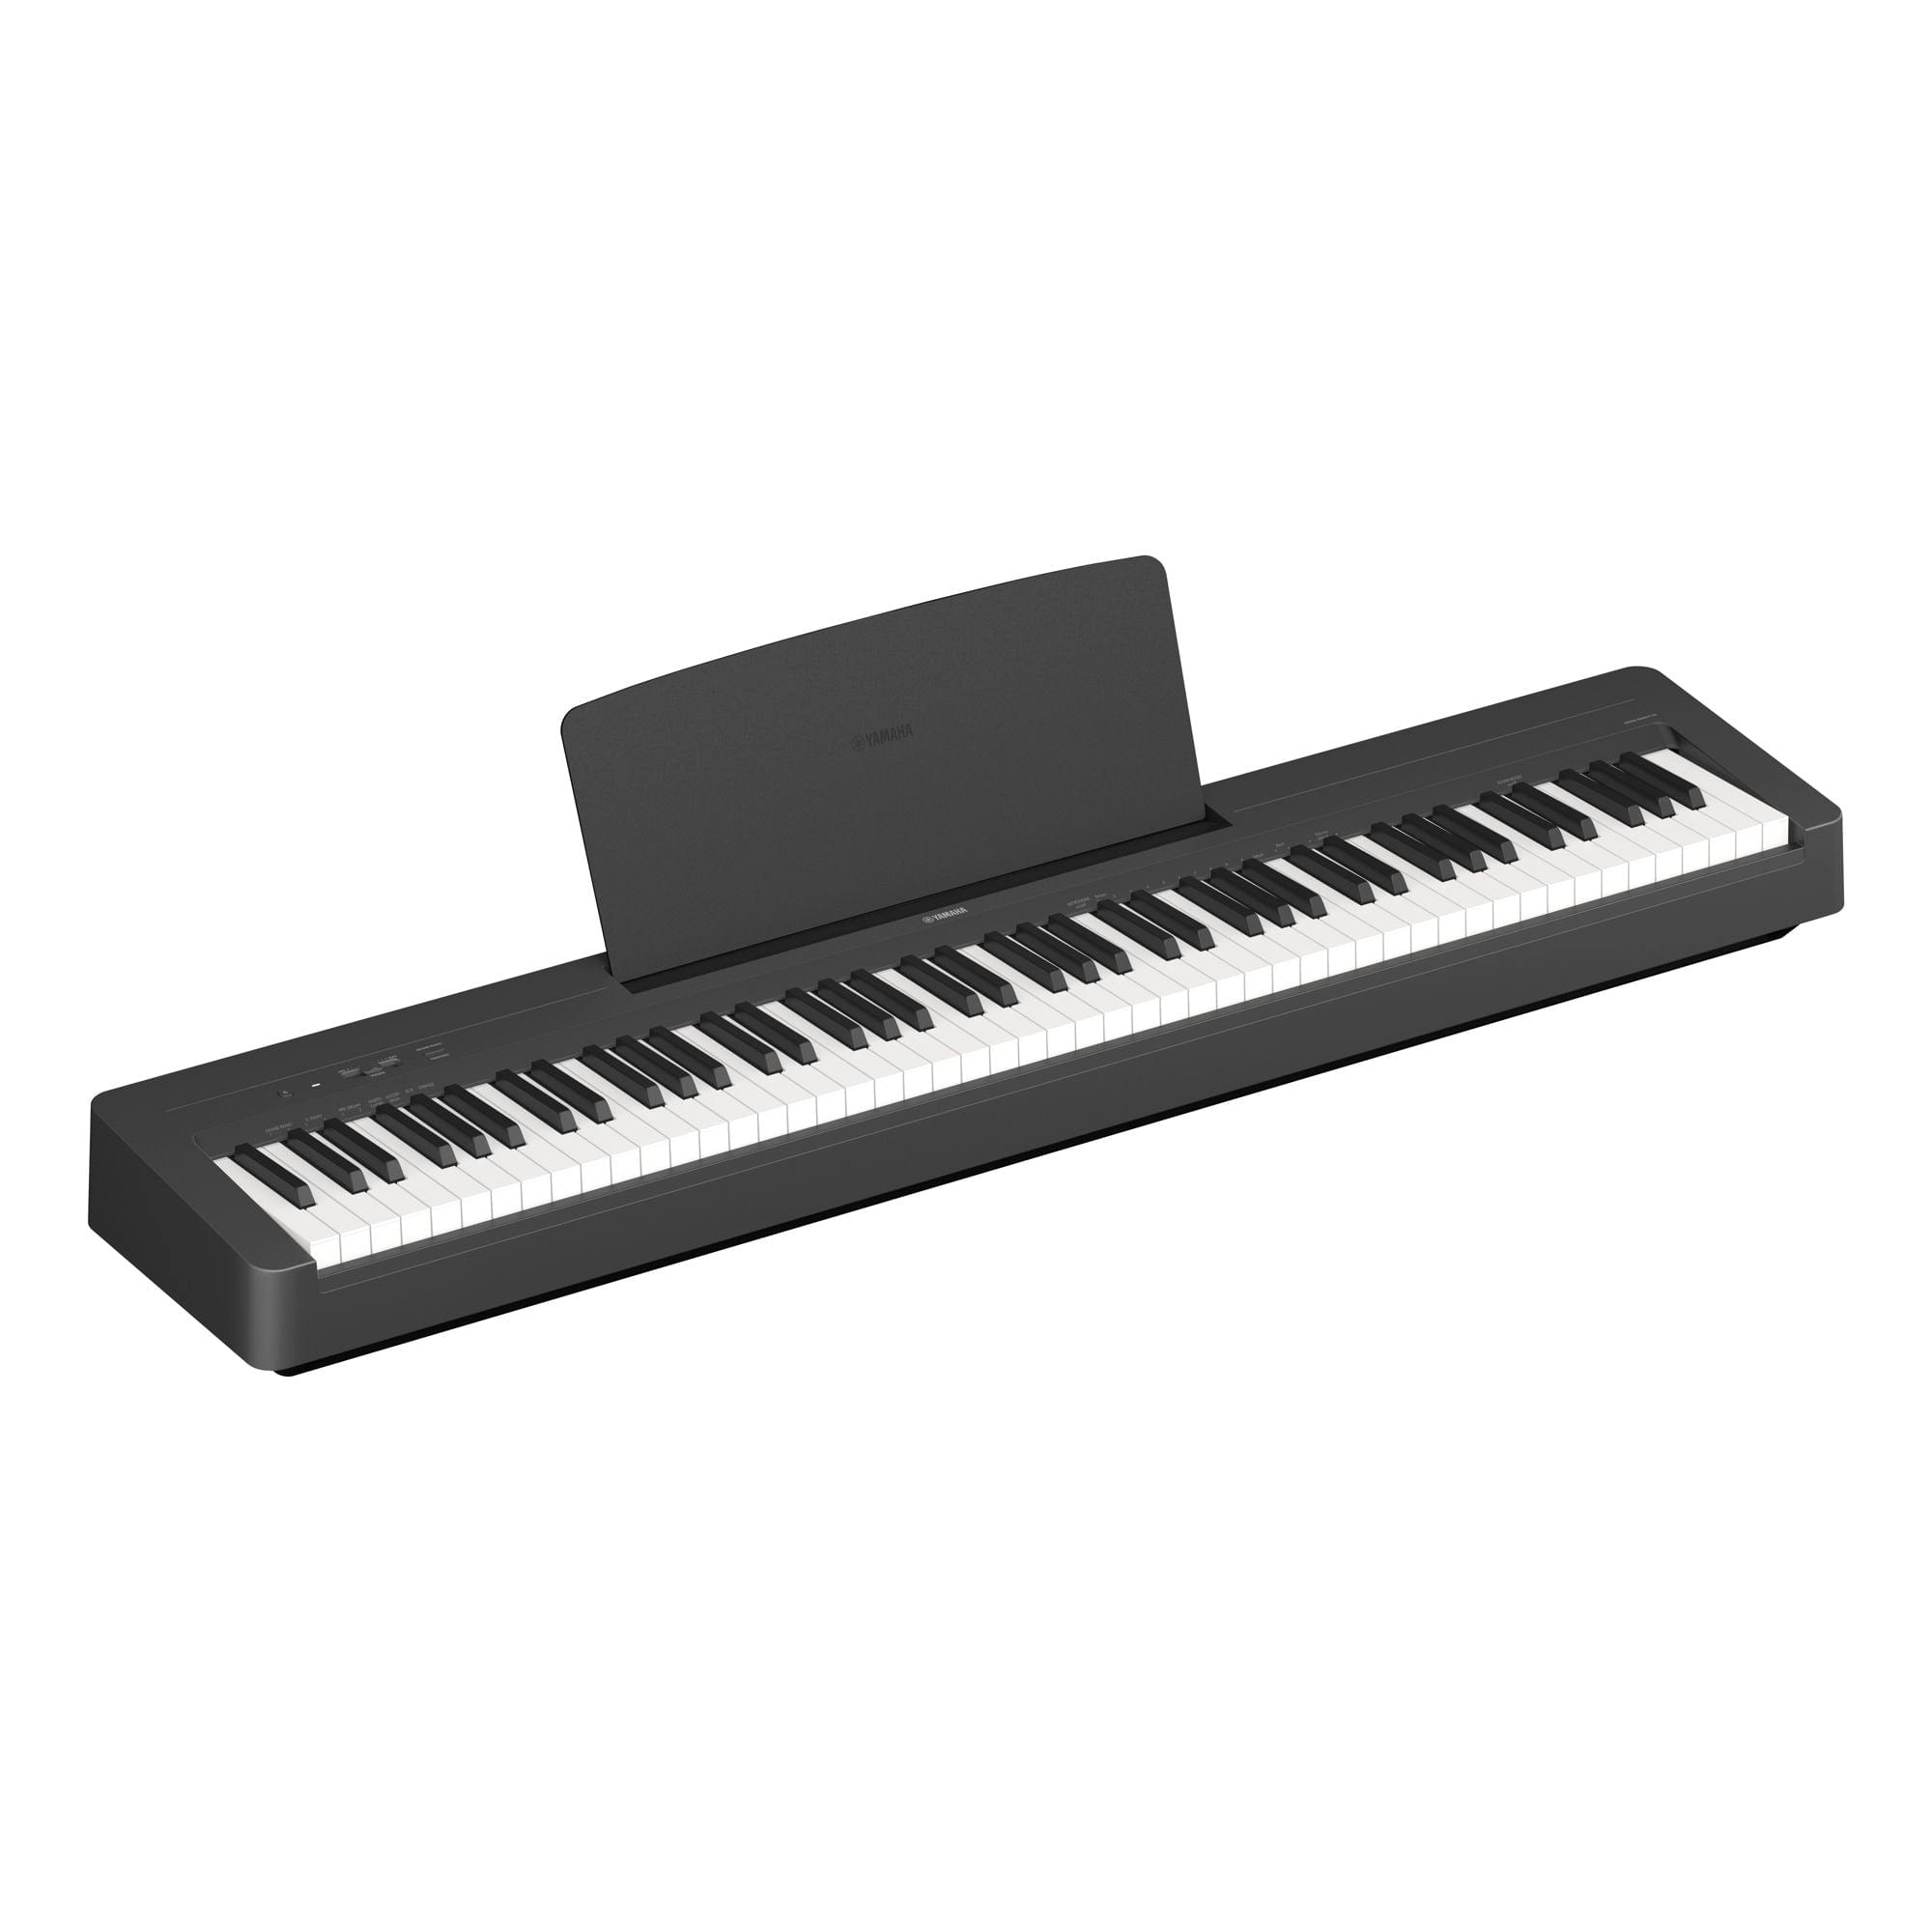 Yamaha P-145 Digital Piano